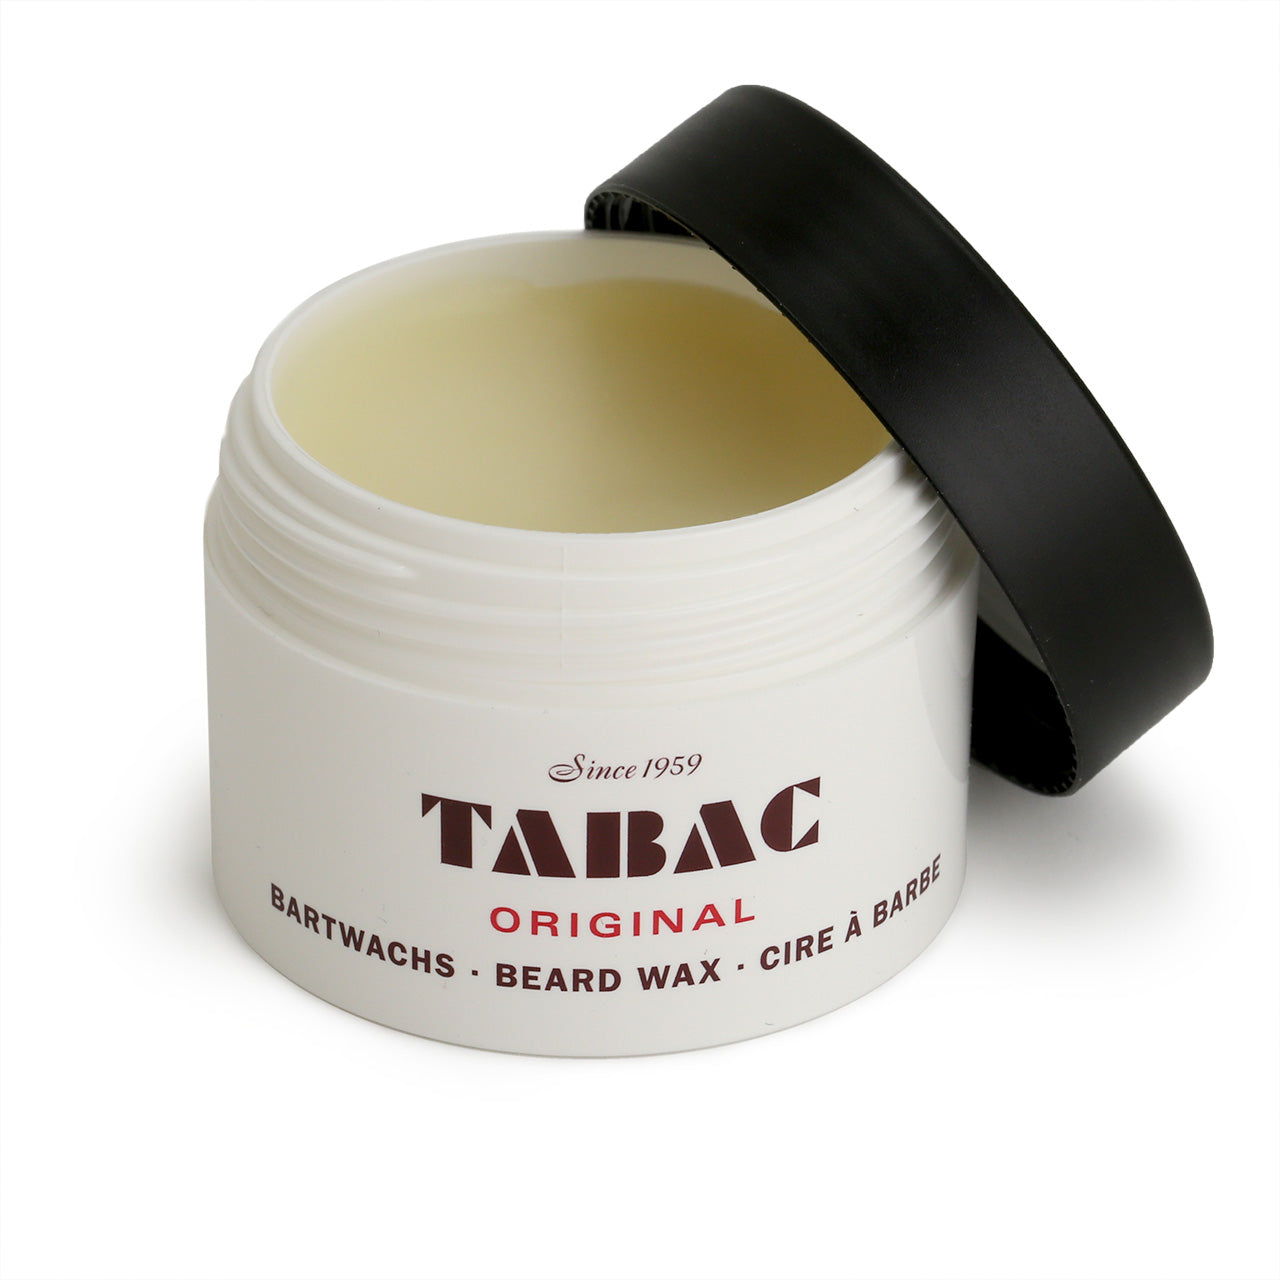 Tabac Original Beard Wax tub sitting on the signature packaging